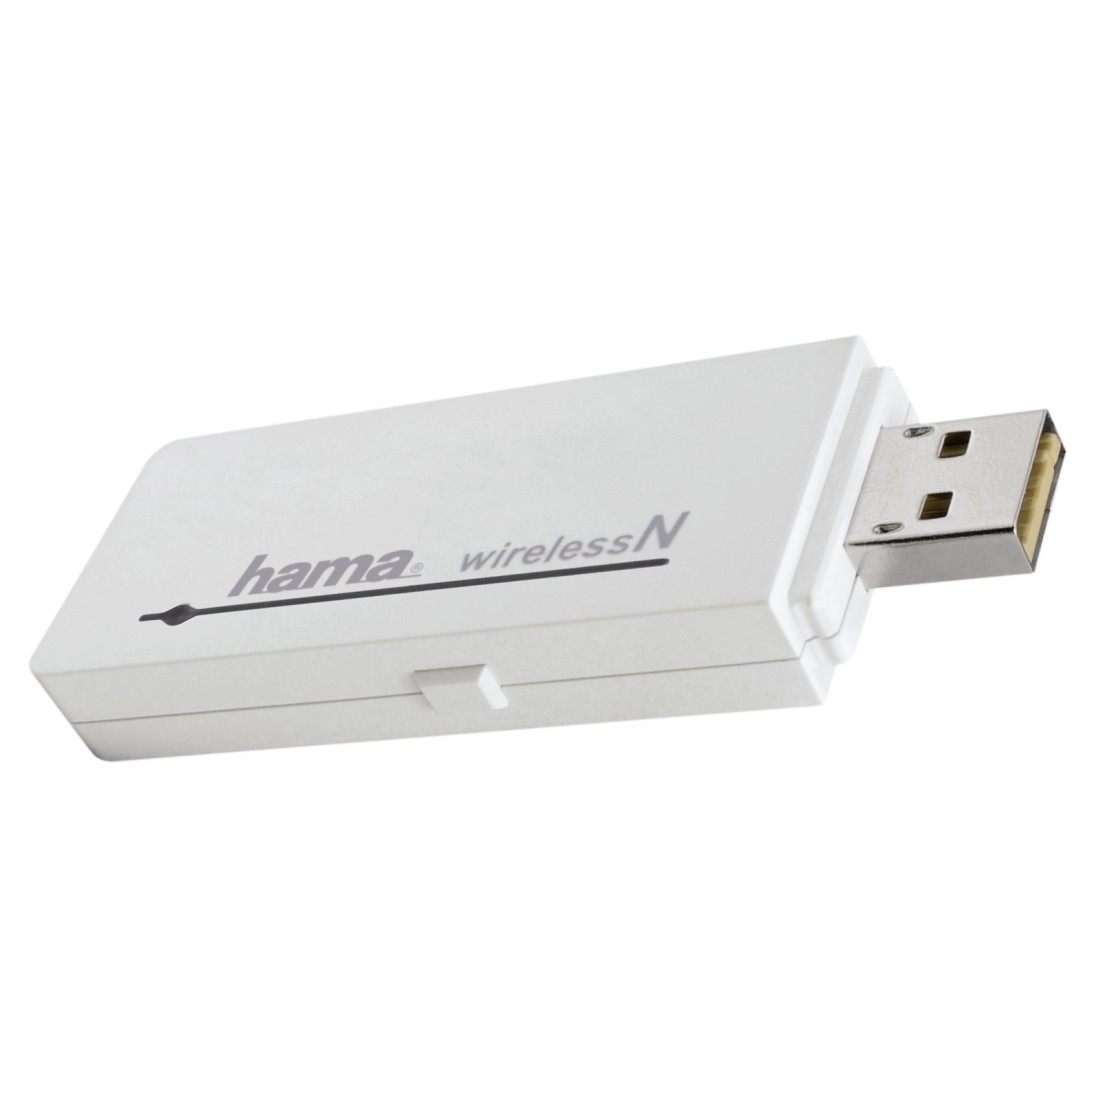 Hama N600 Dual Band WLAN USB Stick, 2.4/5 GHz